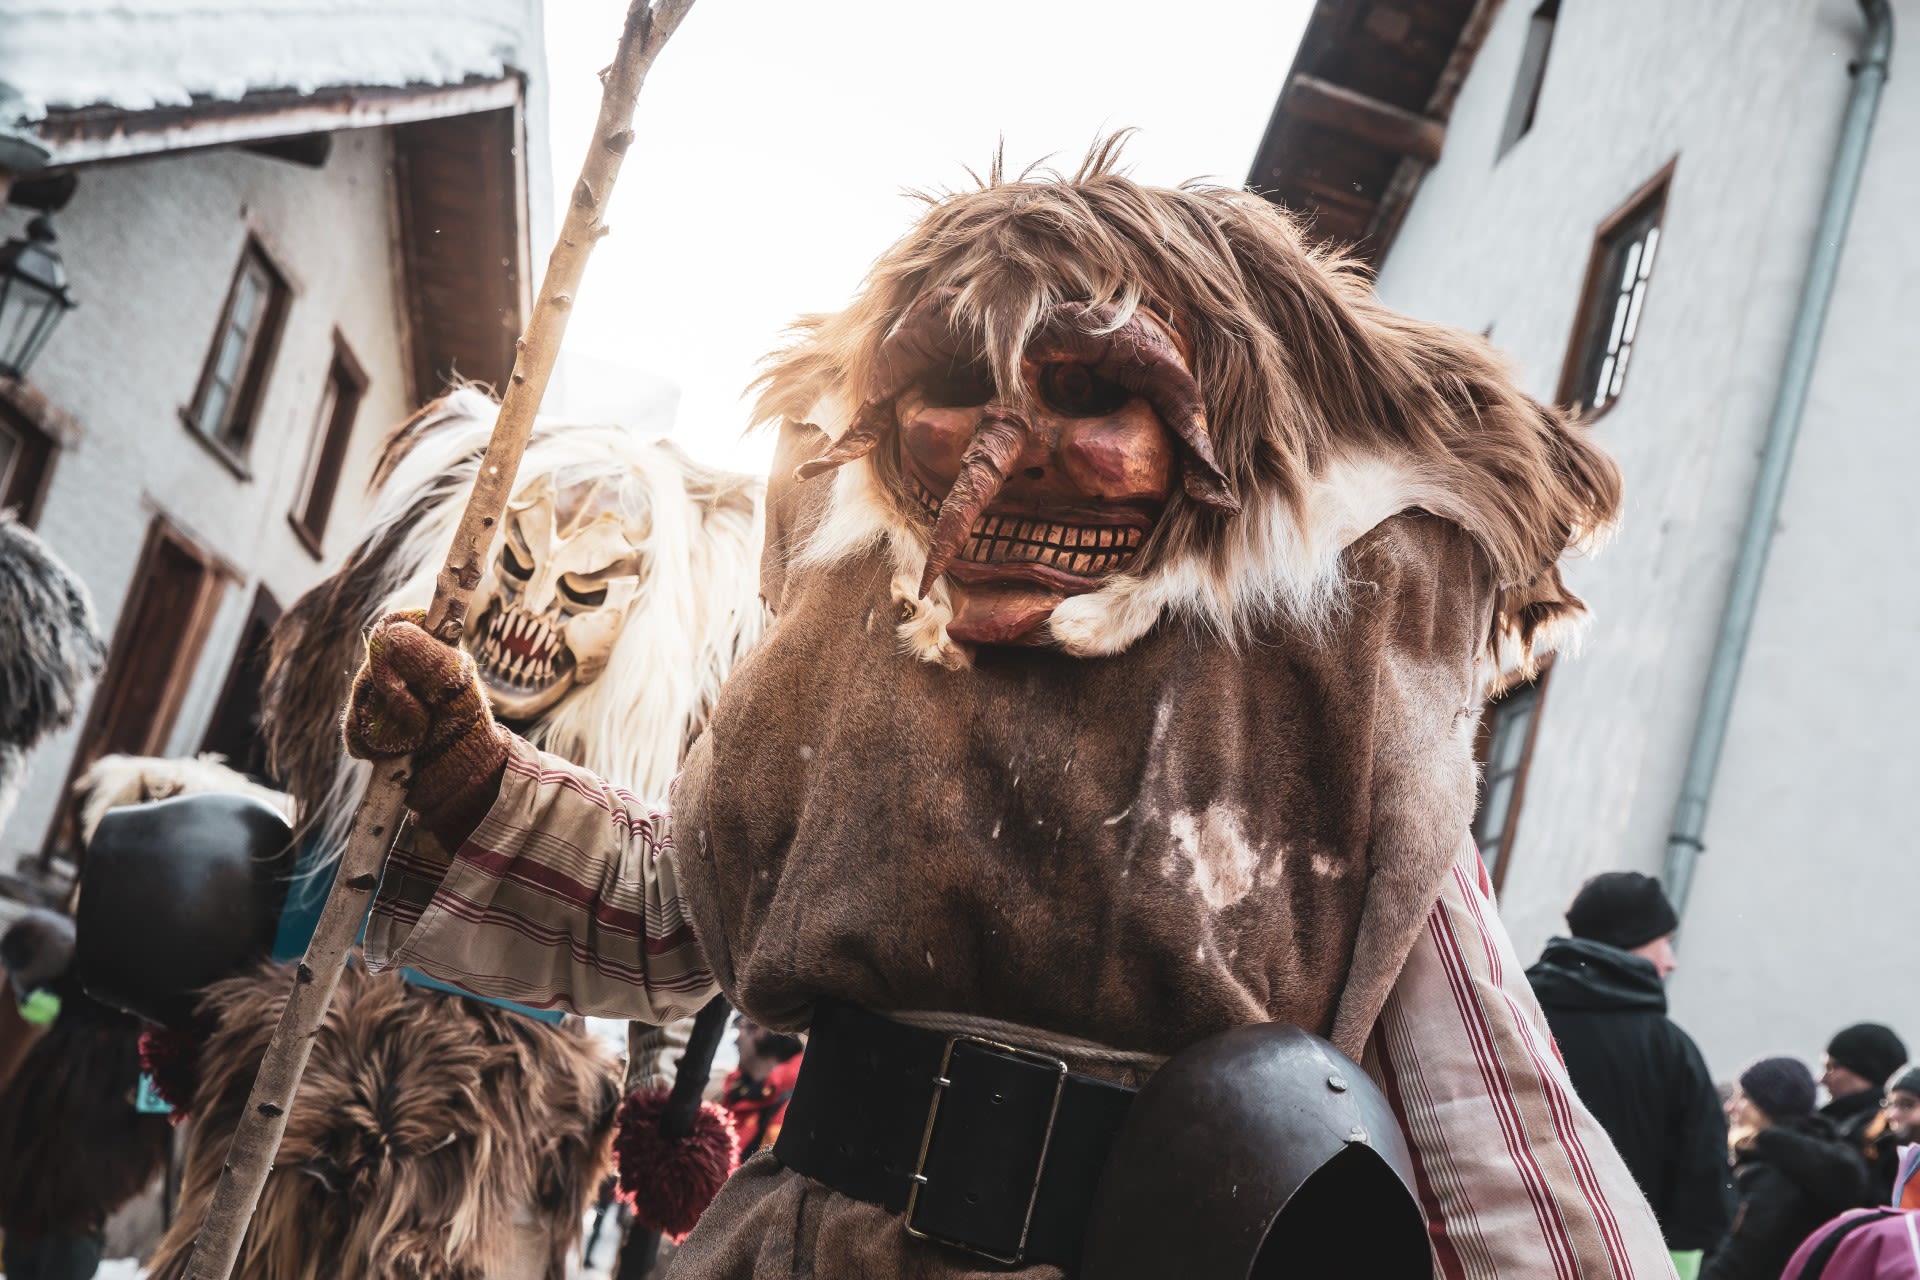 The masked carnival figures characteristic of Lötschental, the so-called Tschäggättä, carnival in Lötschental, Valais, Switzerland